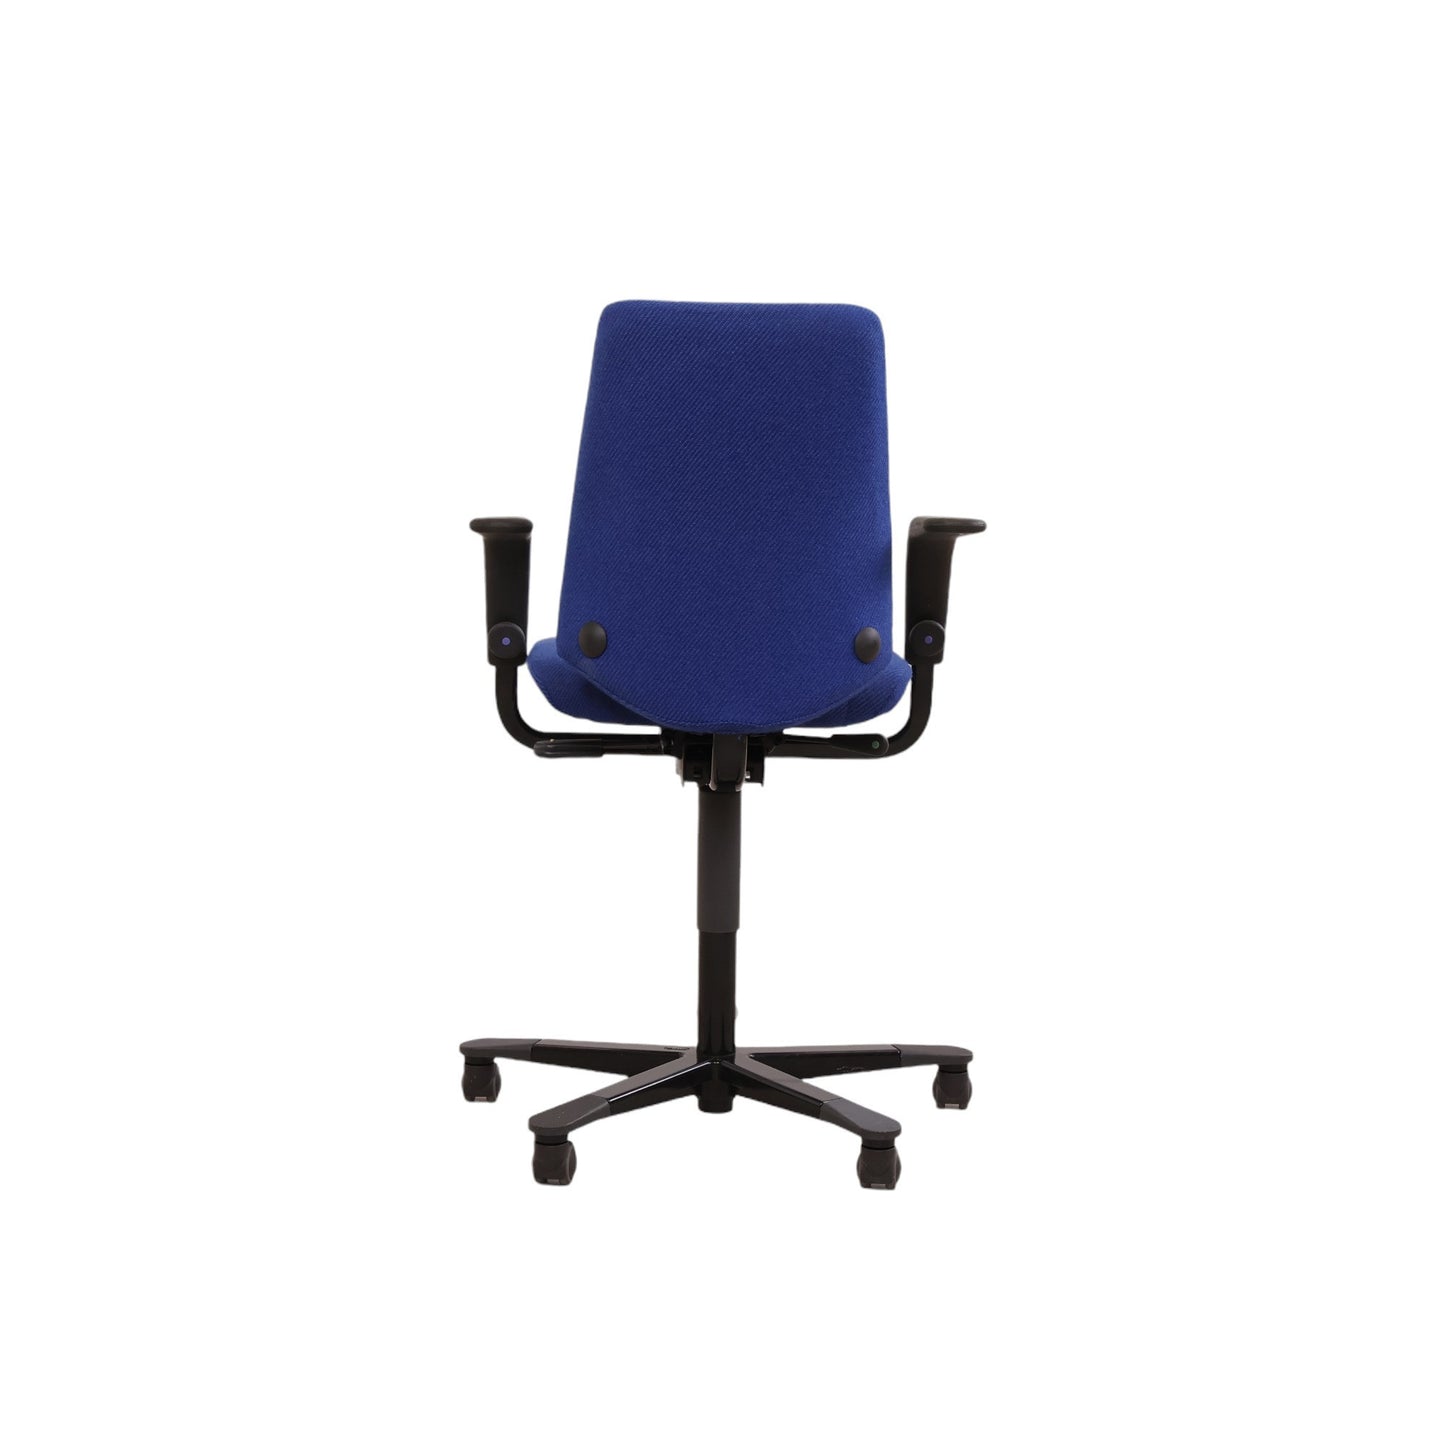 Håg kontorstol i fargen blå